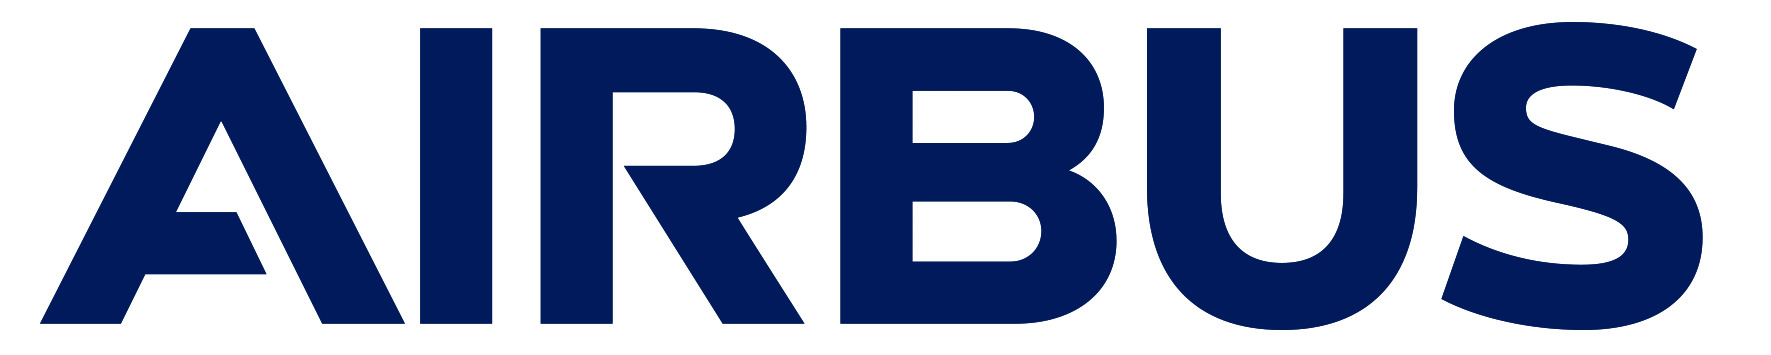 Airbus Logo icons